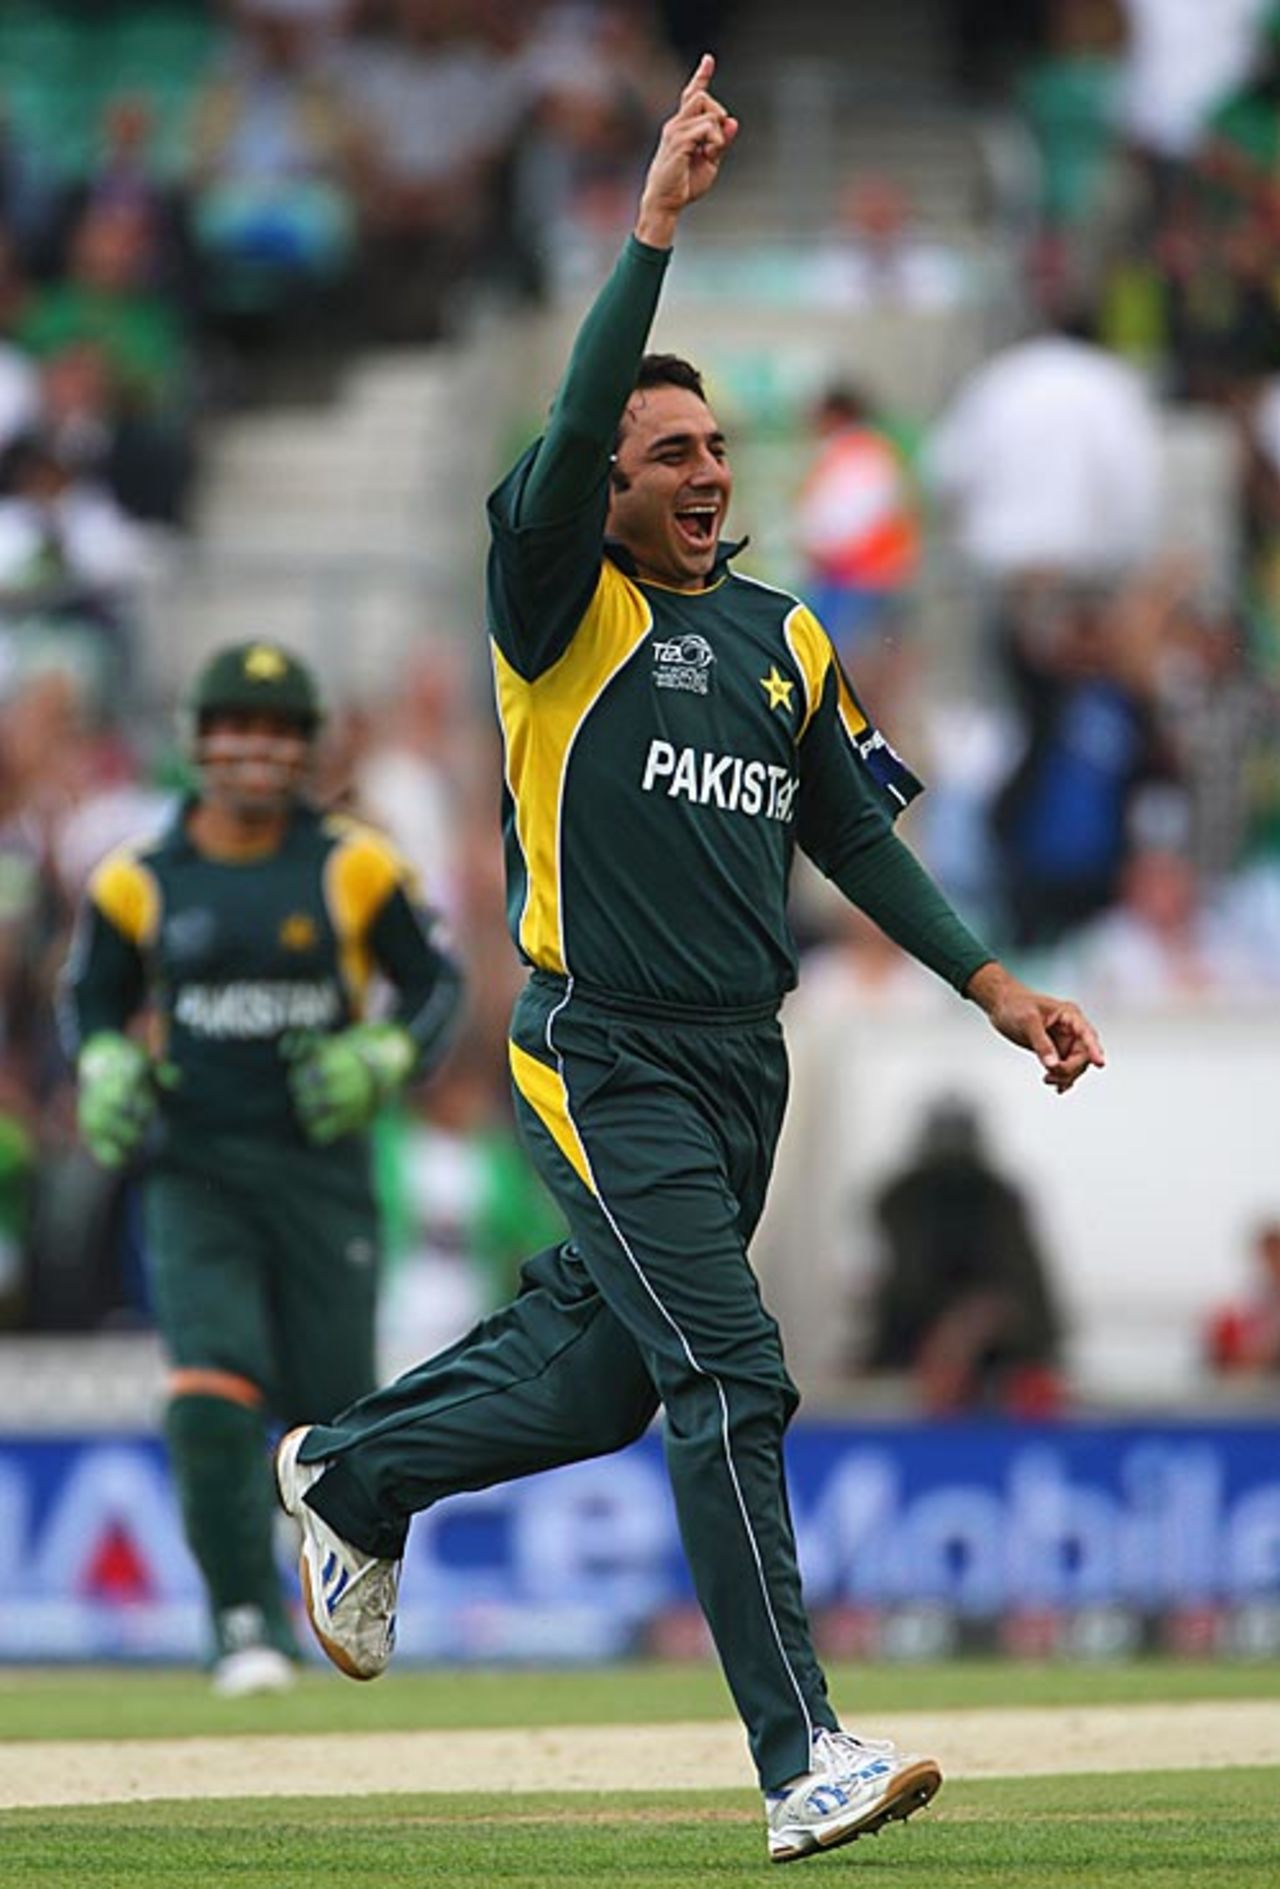 Saeed Ajmal took 4 for 19, Ireland v Pakistan, ICC World Twenty20 Super Eights, The Oval, June 15, 2009